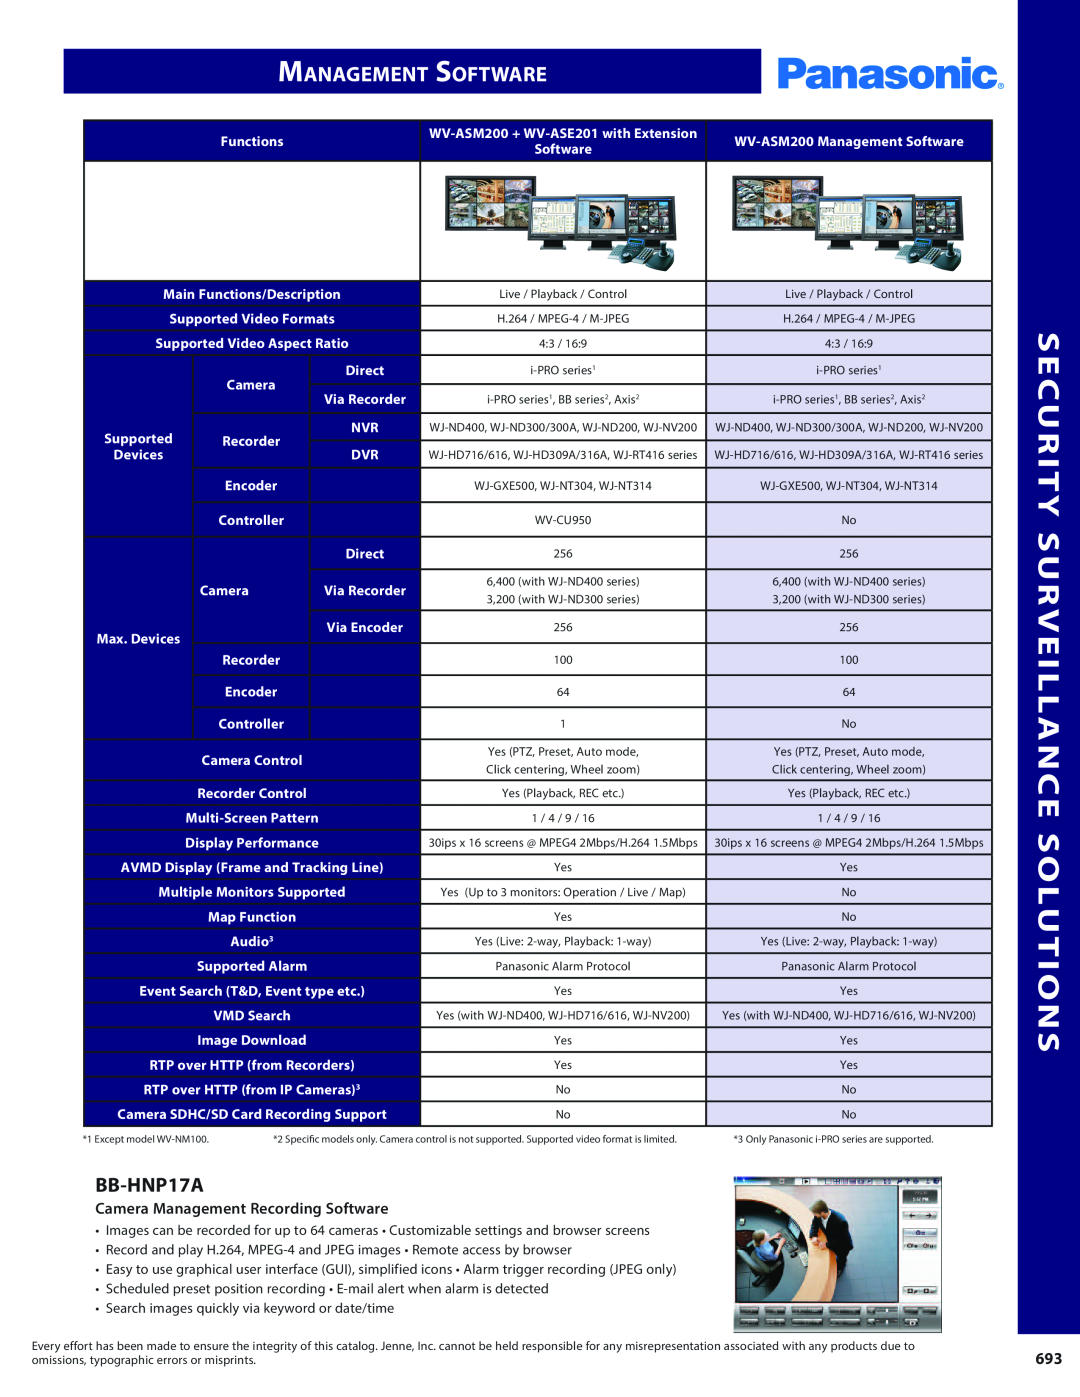 Panasonic PMPU2000 manual Security Surveillance Solutions, Management Software, Camera Management Recording Software 